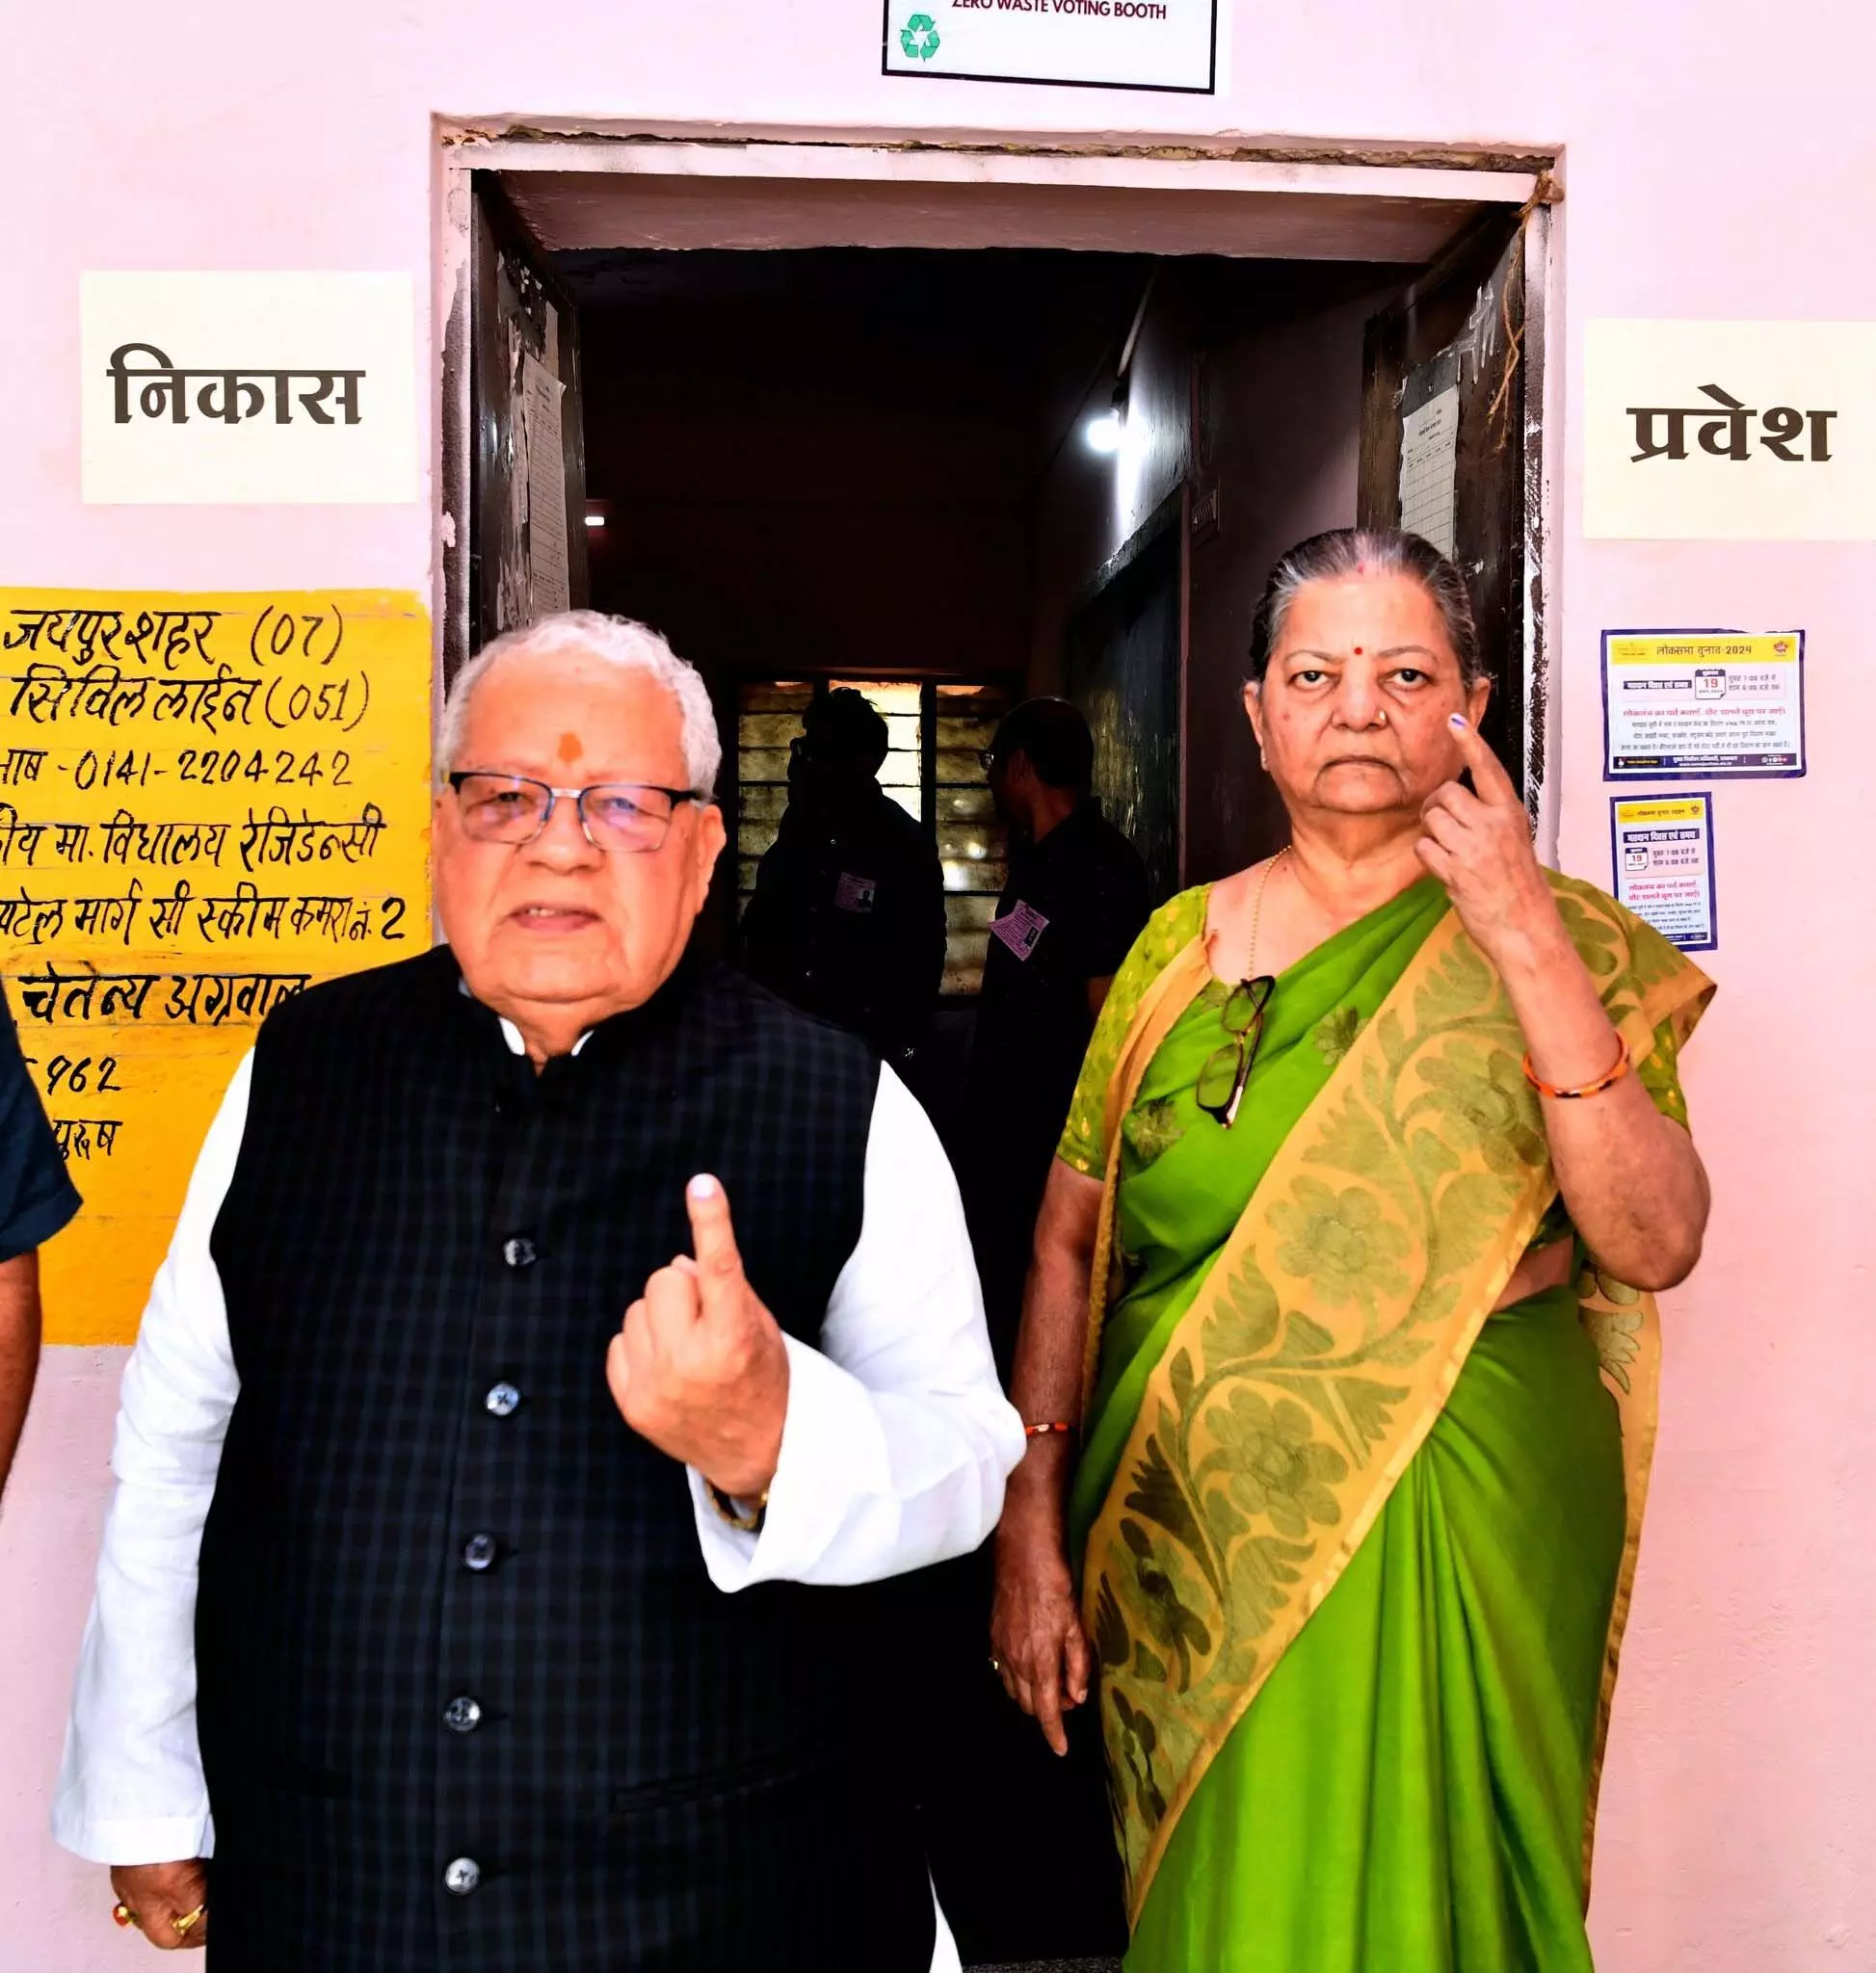 मतदान करने पहुंचे राजस्थान गवर्नर ने लोगों से भी की वोट डालने की अपील